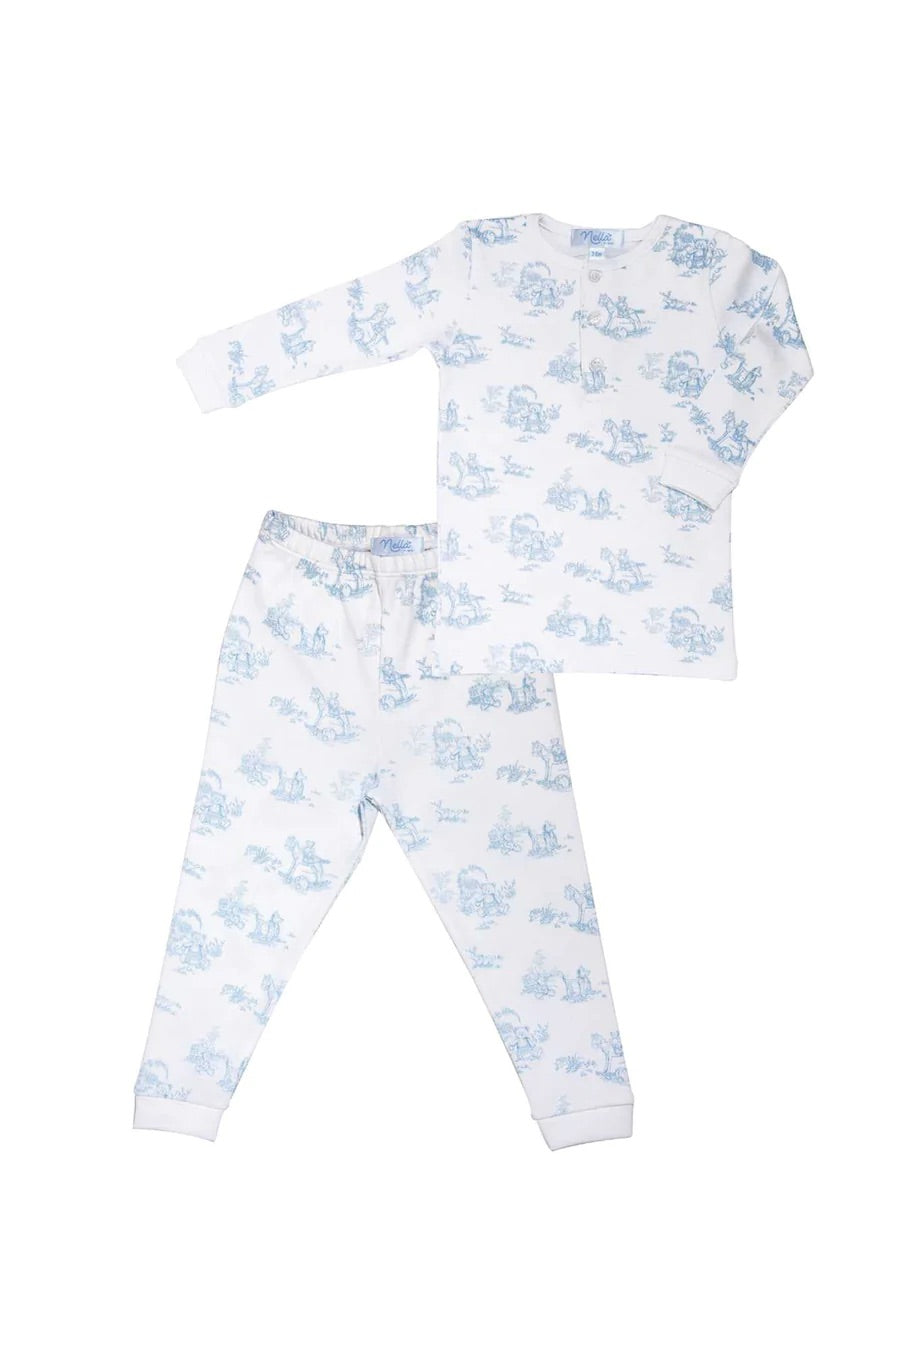 Blue bear toile print two piece pajama set by Nella Pima. 